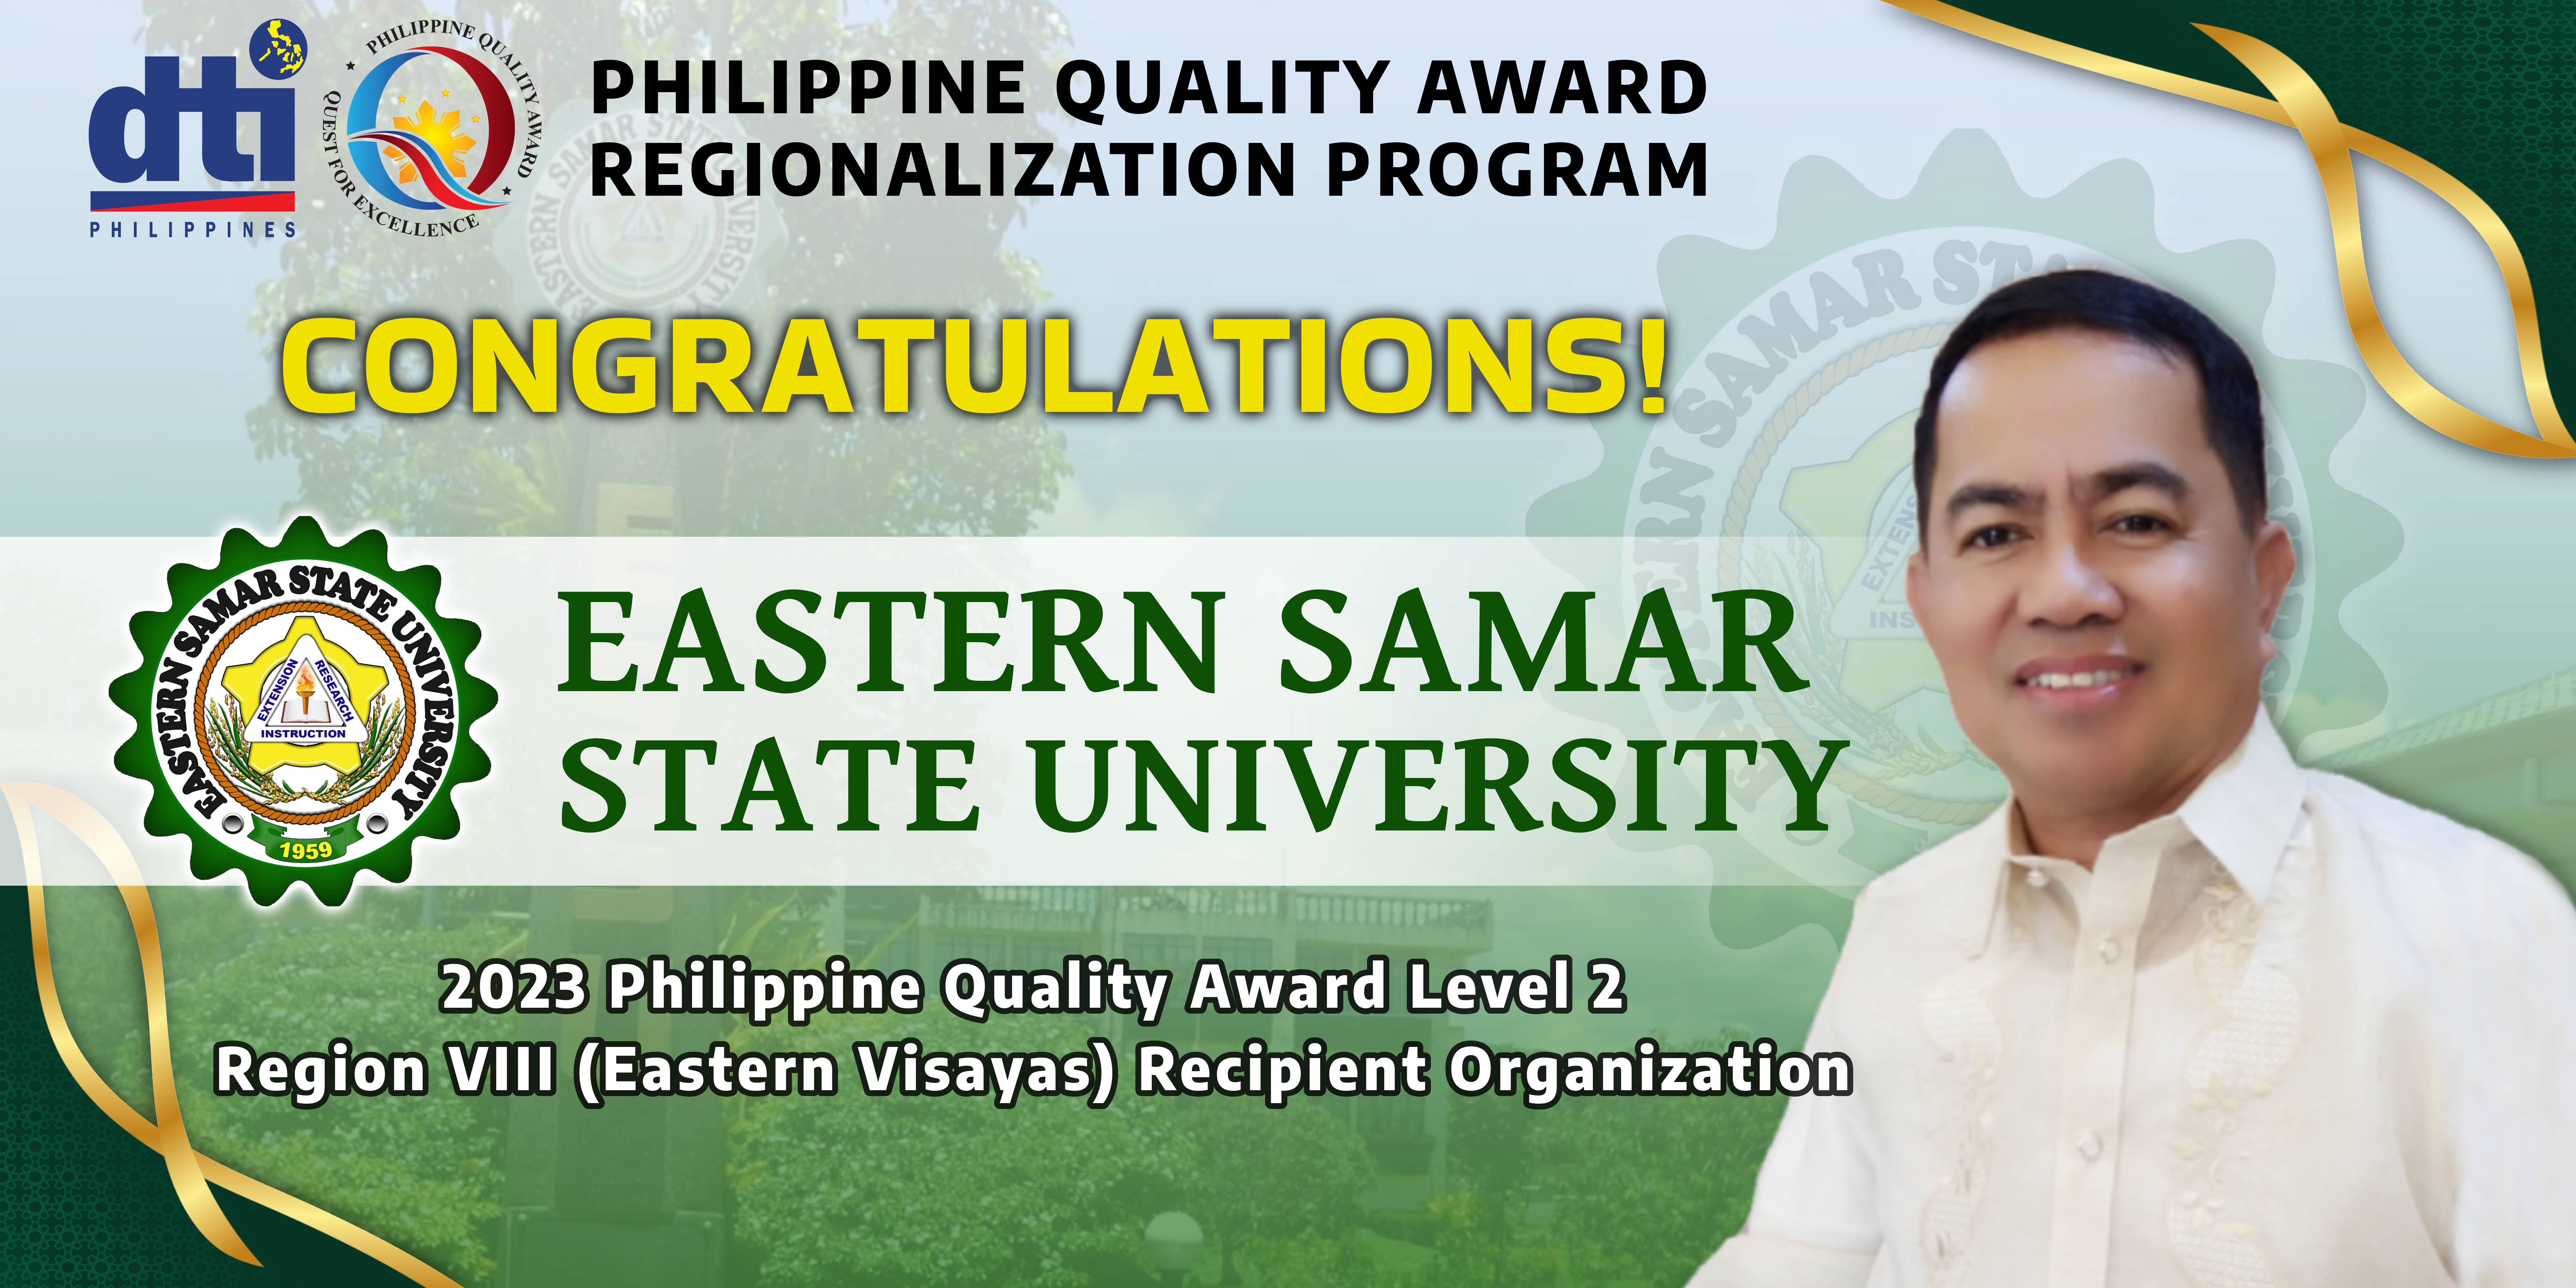 ESSU Receives Level 2 Recognition in the 2023 Philippine Quality Award (PQA) Regionalization Program 